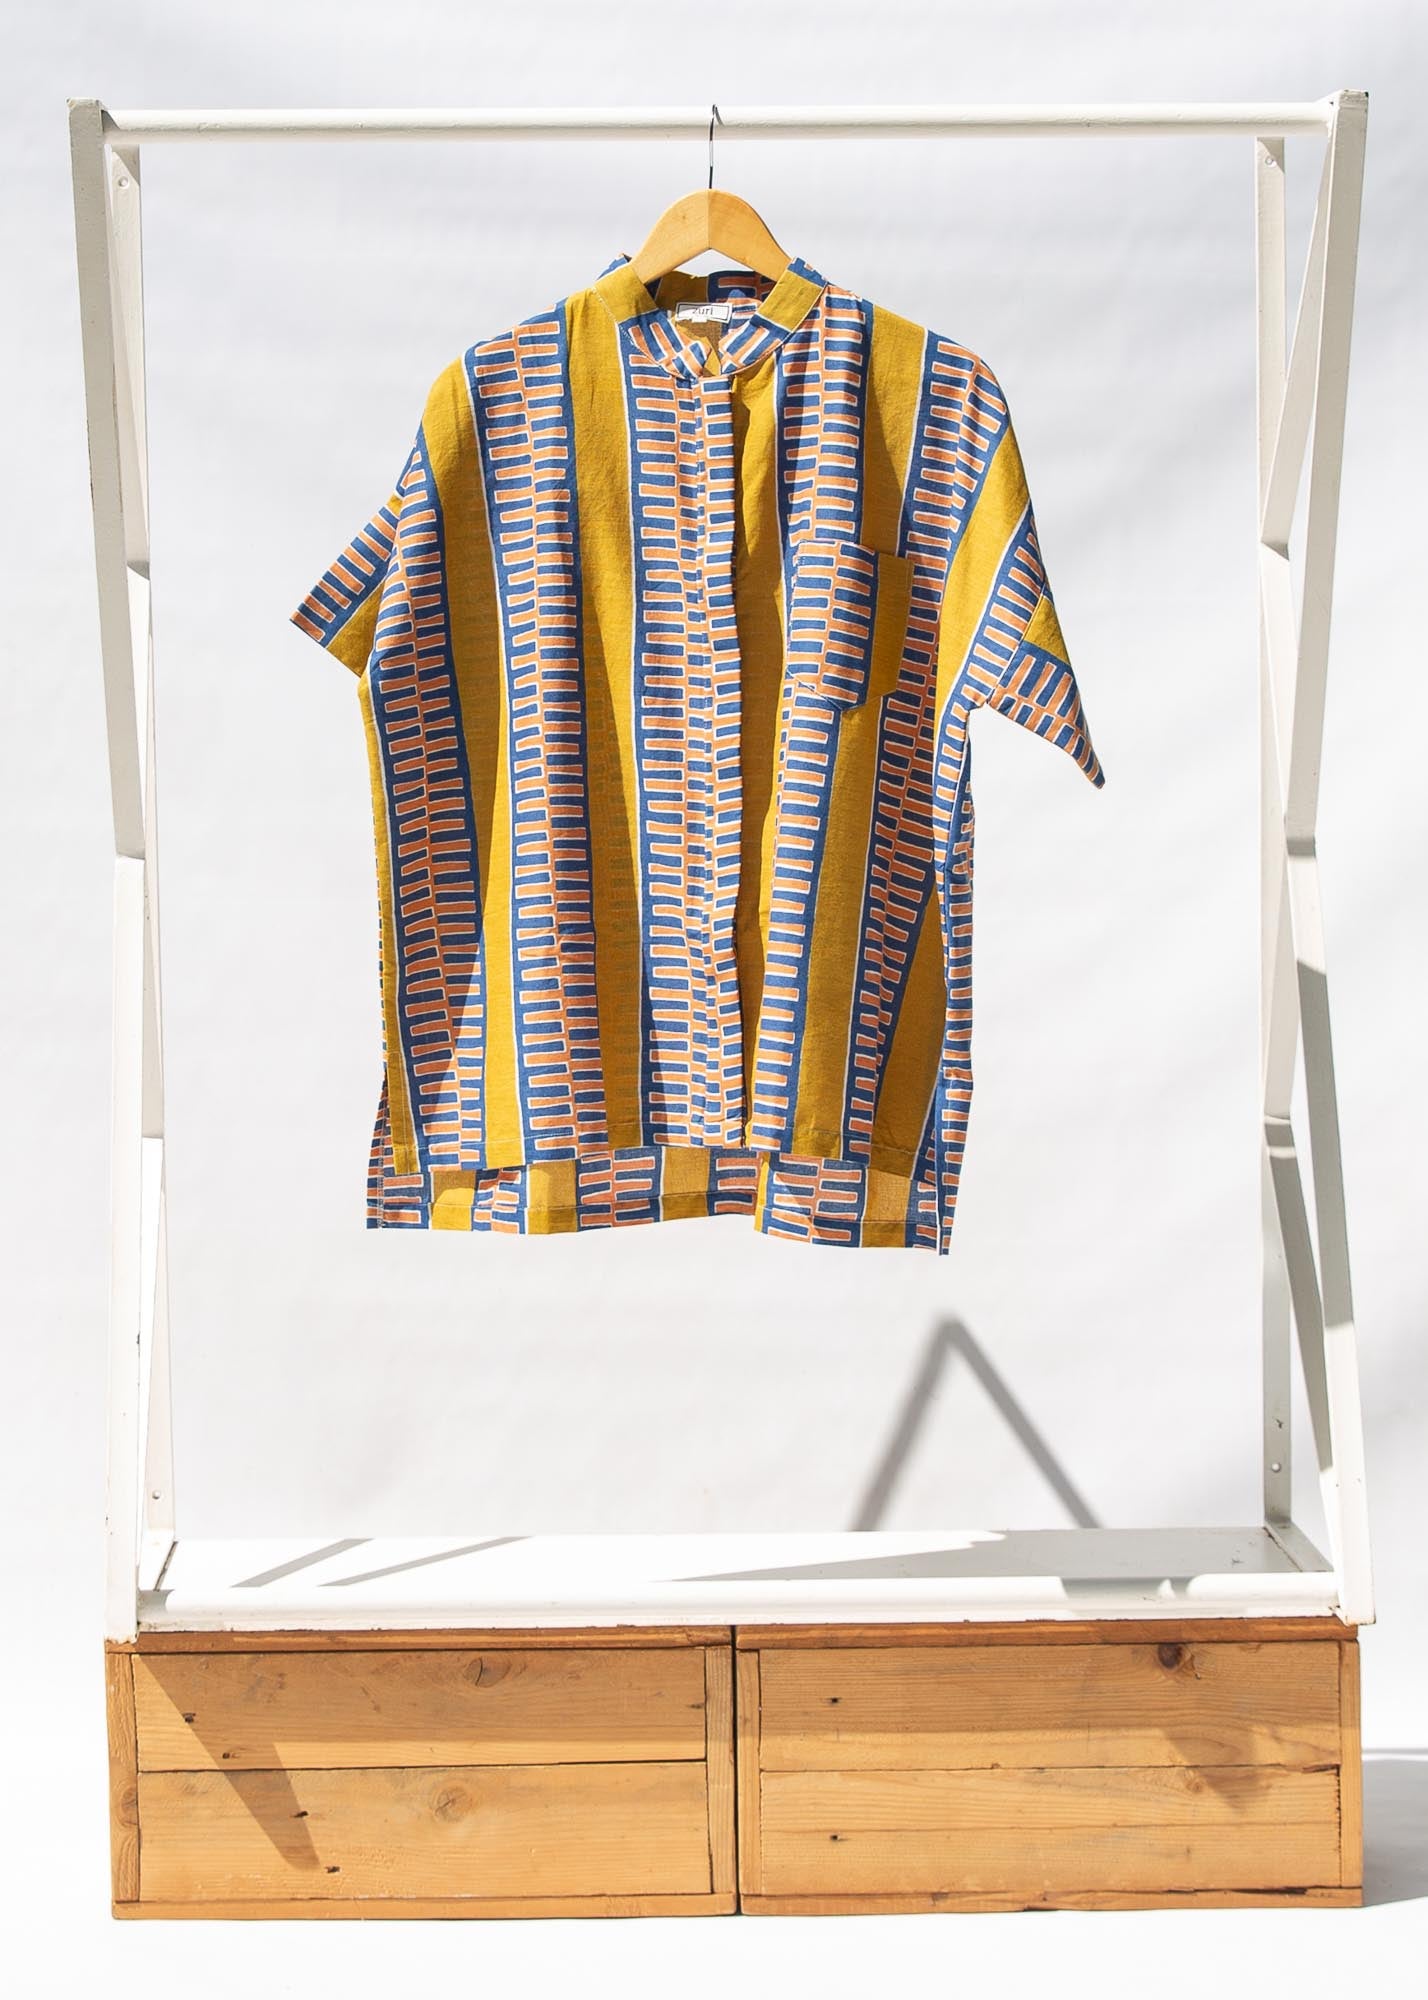 Display of olive-yellow, blue, orange and white geometric printed shirt